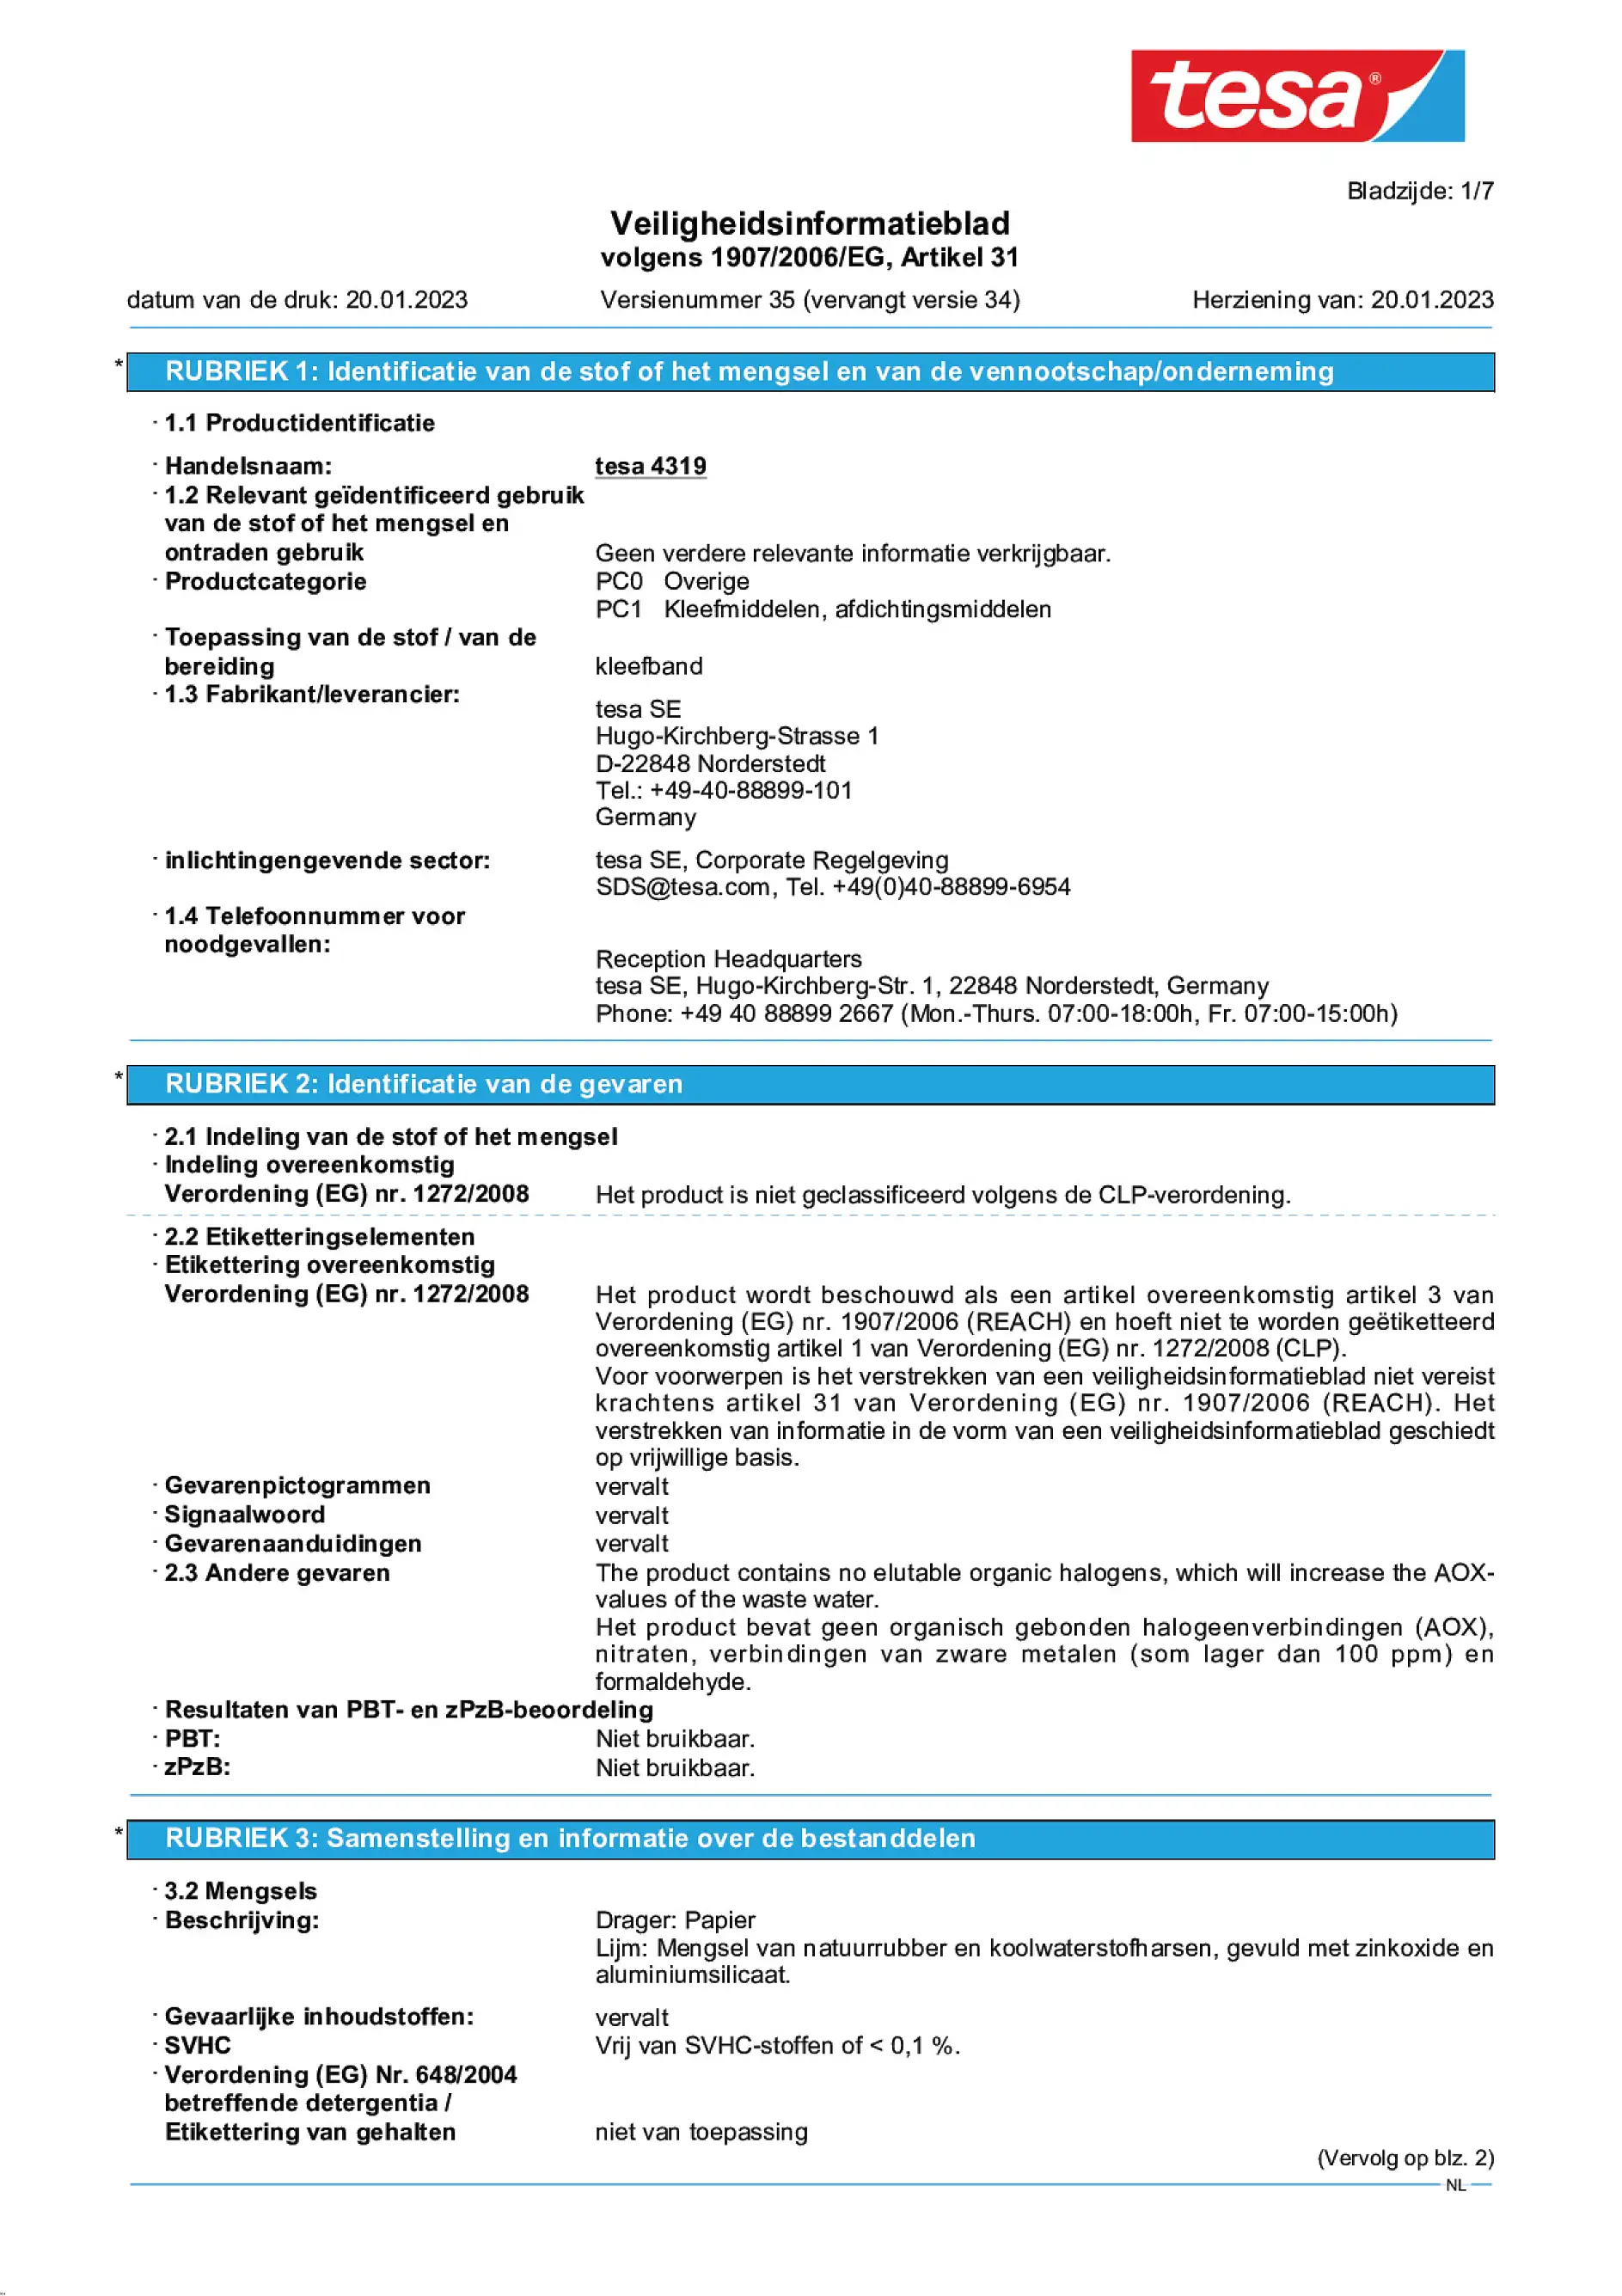 Safety data sheet_tesa® 04319_nl-NL_v35